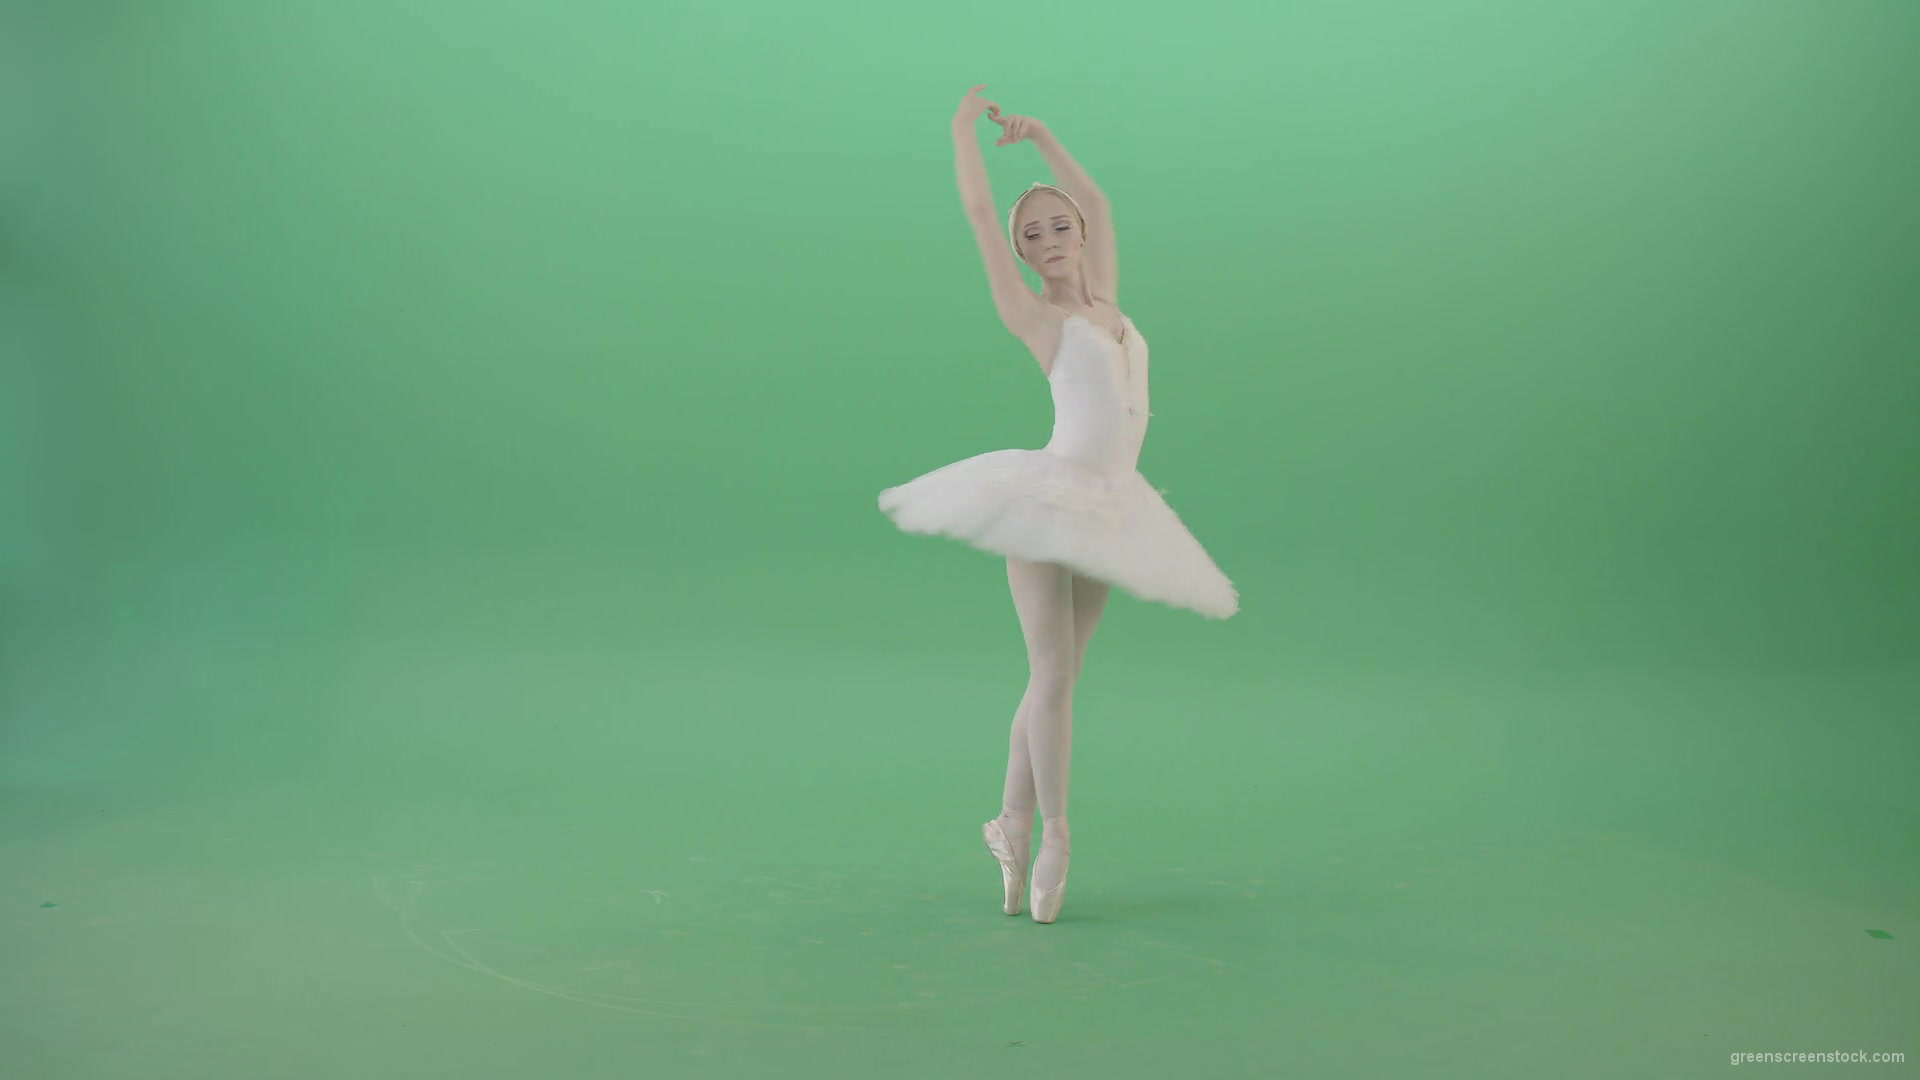 Prima-ballerina-ballet-girl-elegant-dancing-and-spinning-on-green-screen-4K-Video-Footage-1920_005 Green Screen Stock